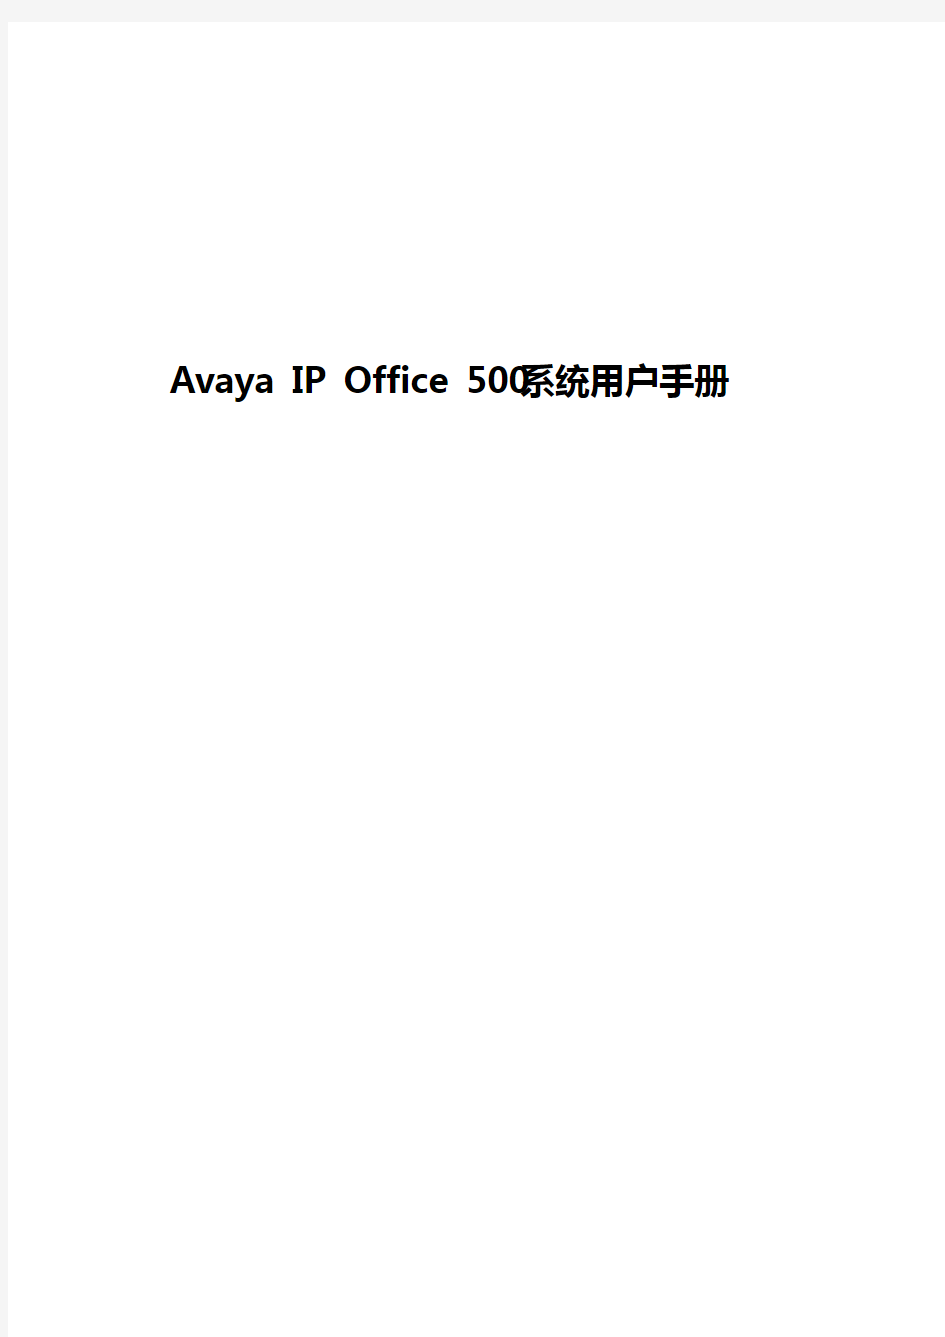 Avaya IP Office 500系统用户手册